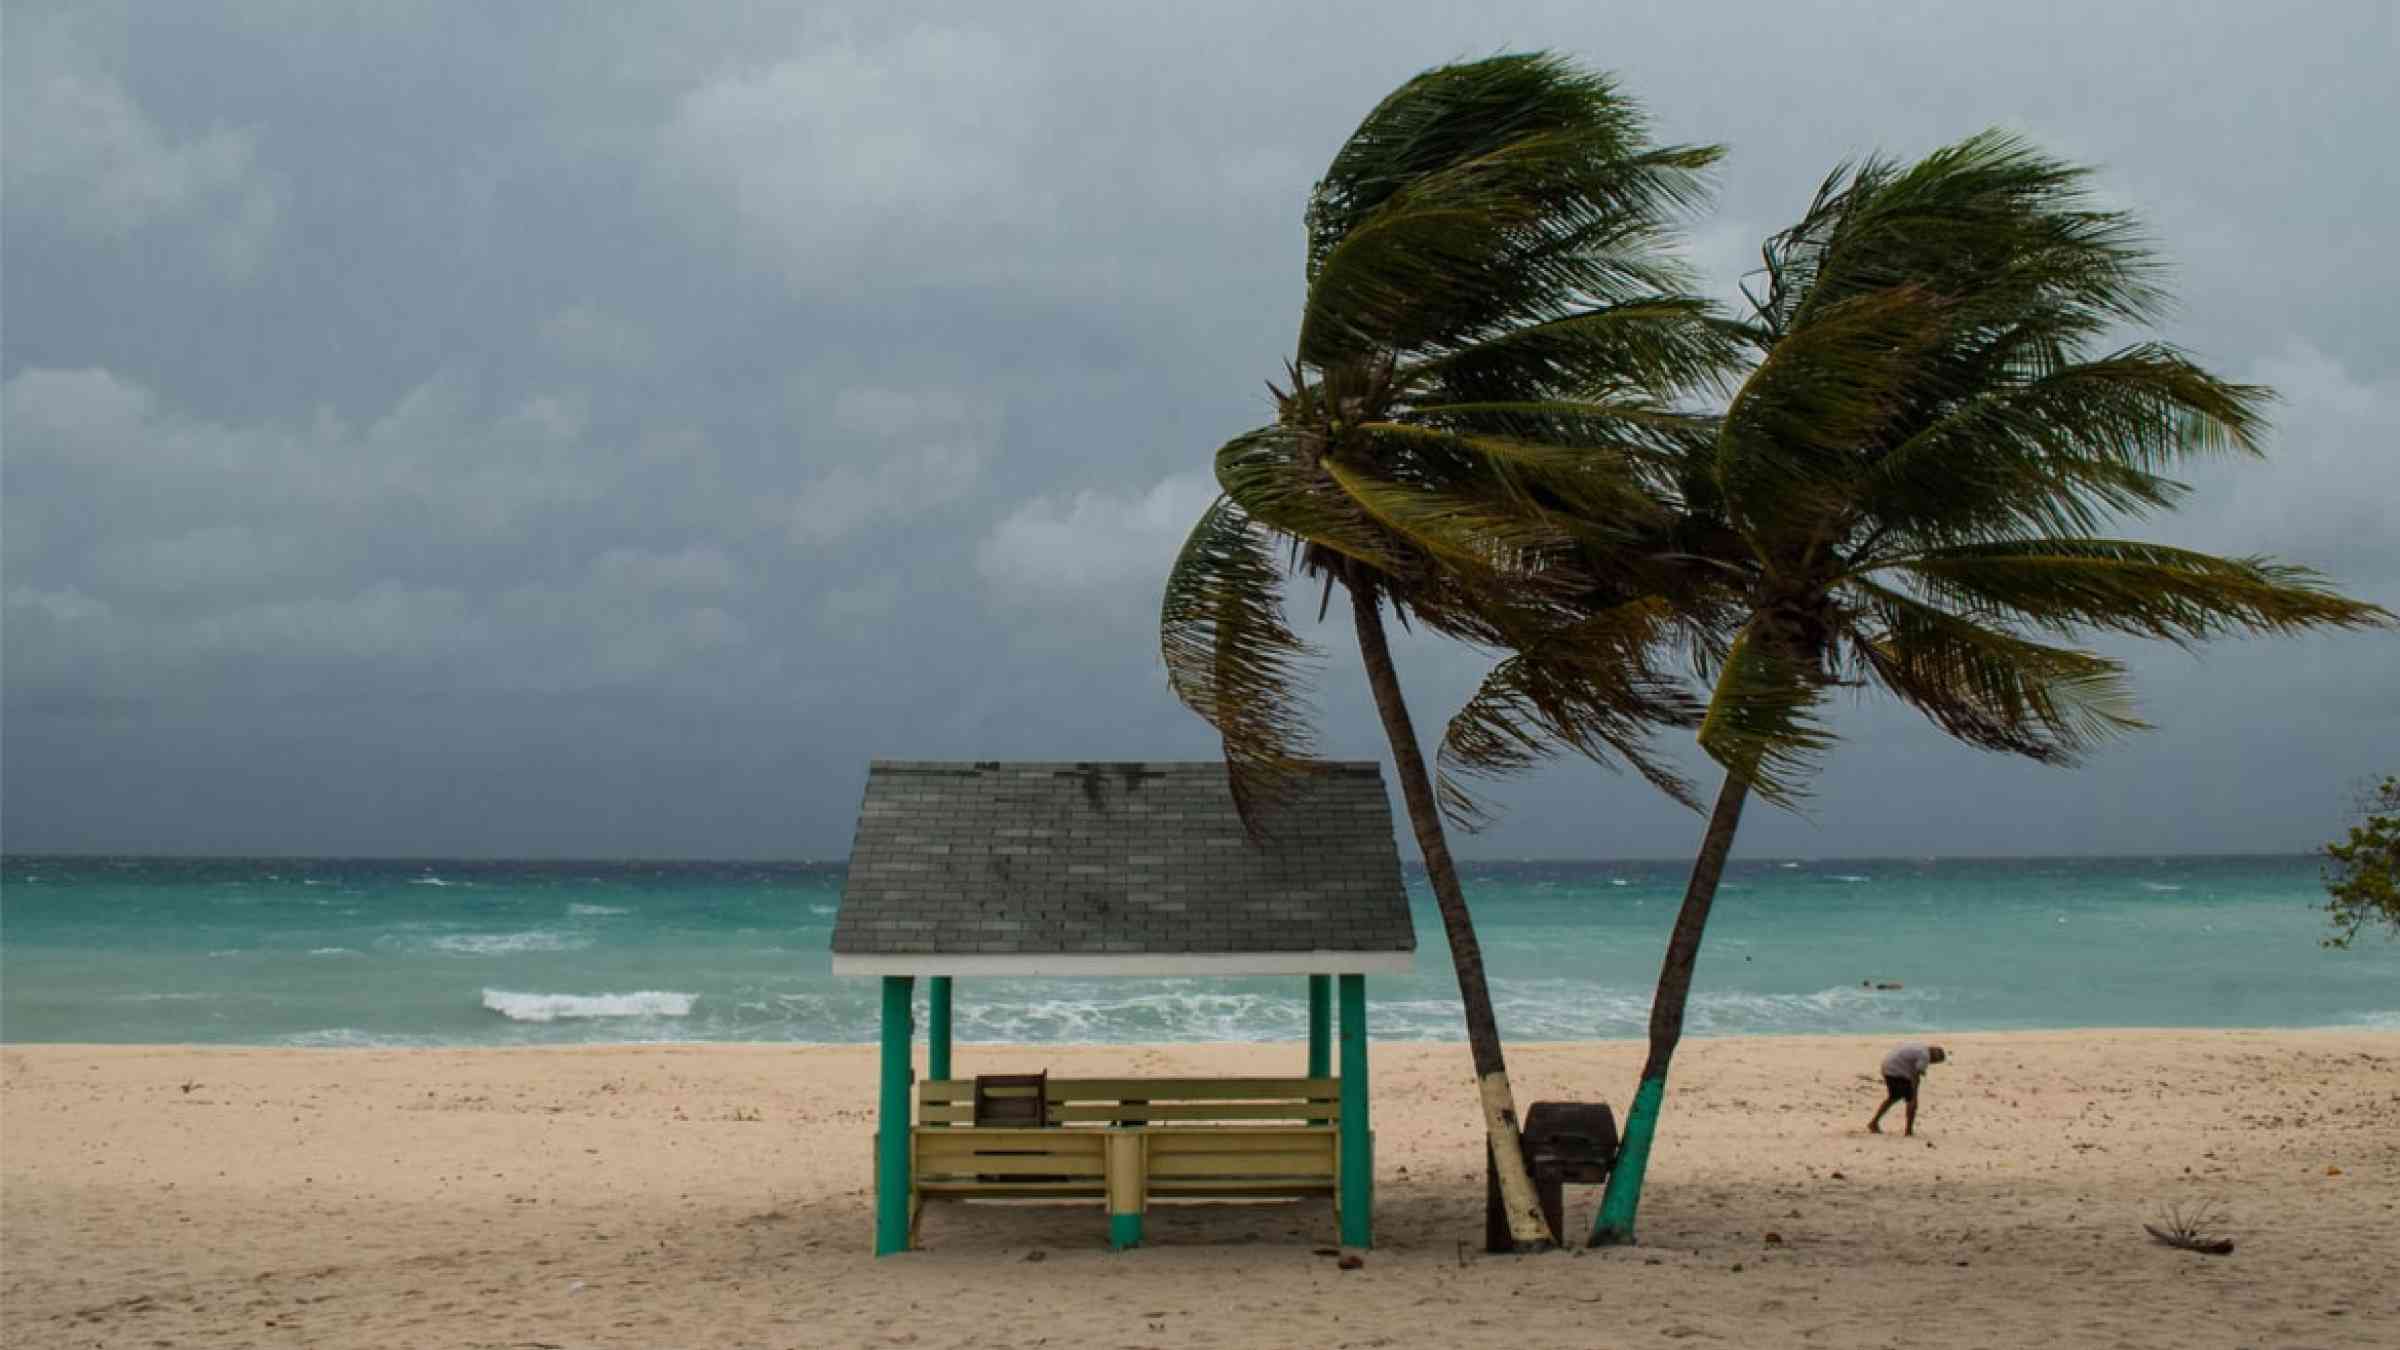 Hurricane in the Caribbean, palm tree on a beach